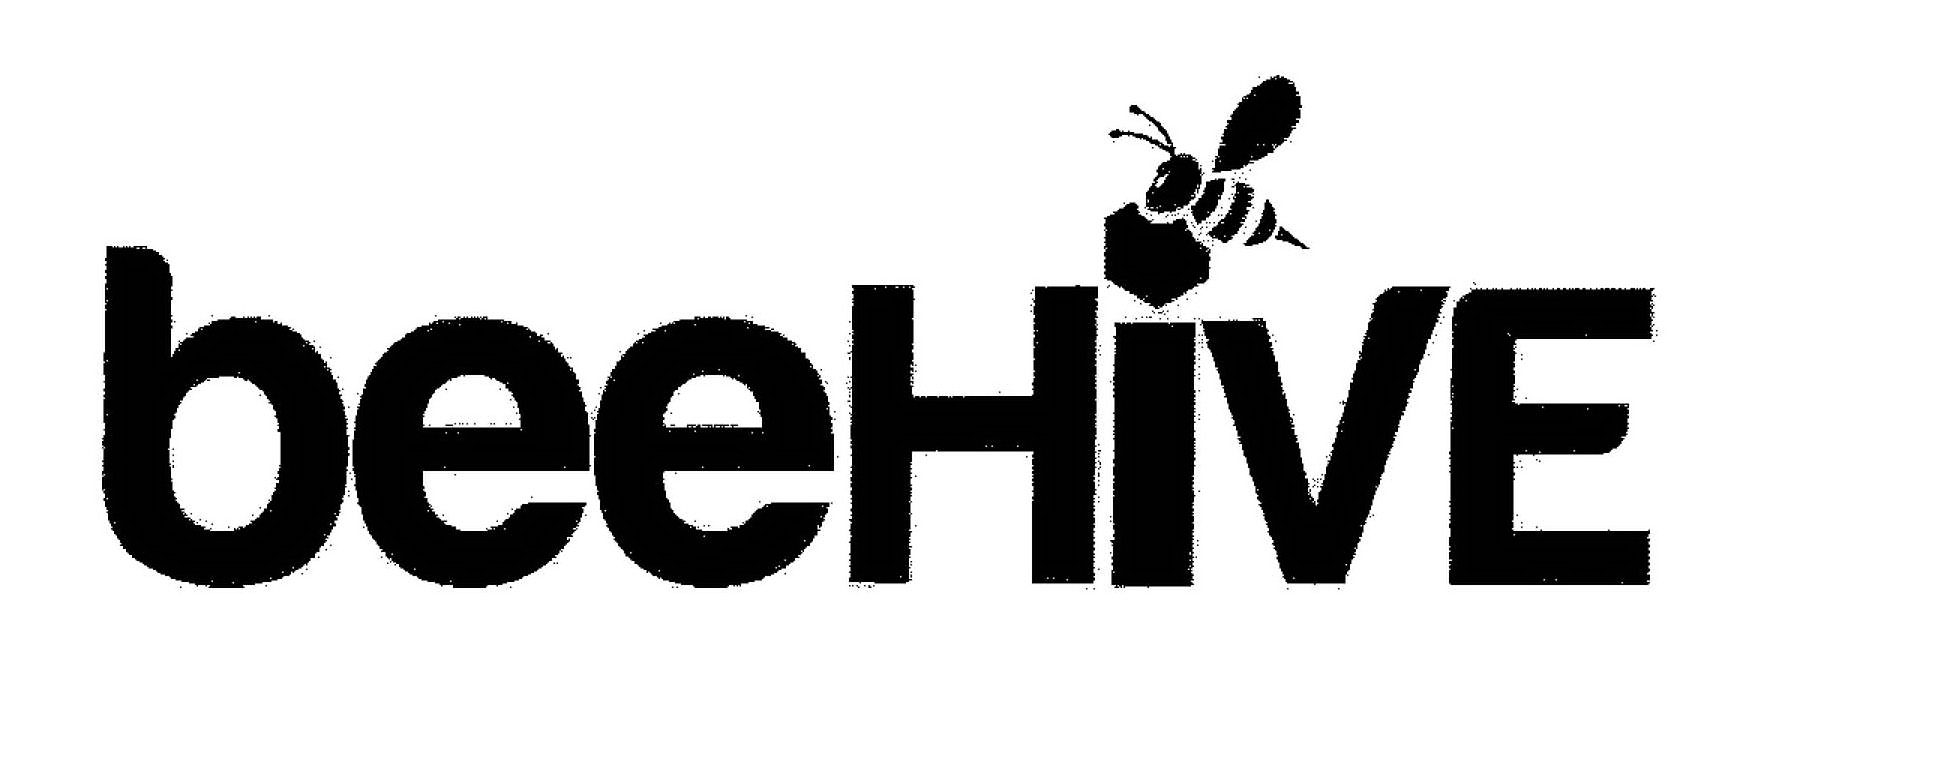 Trademark Logo BEEHIVE